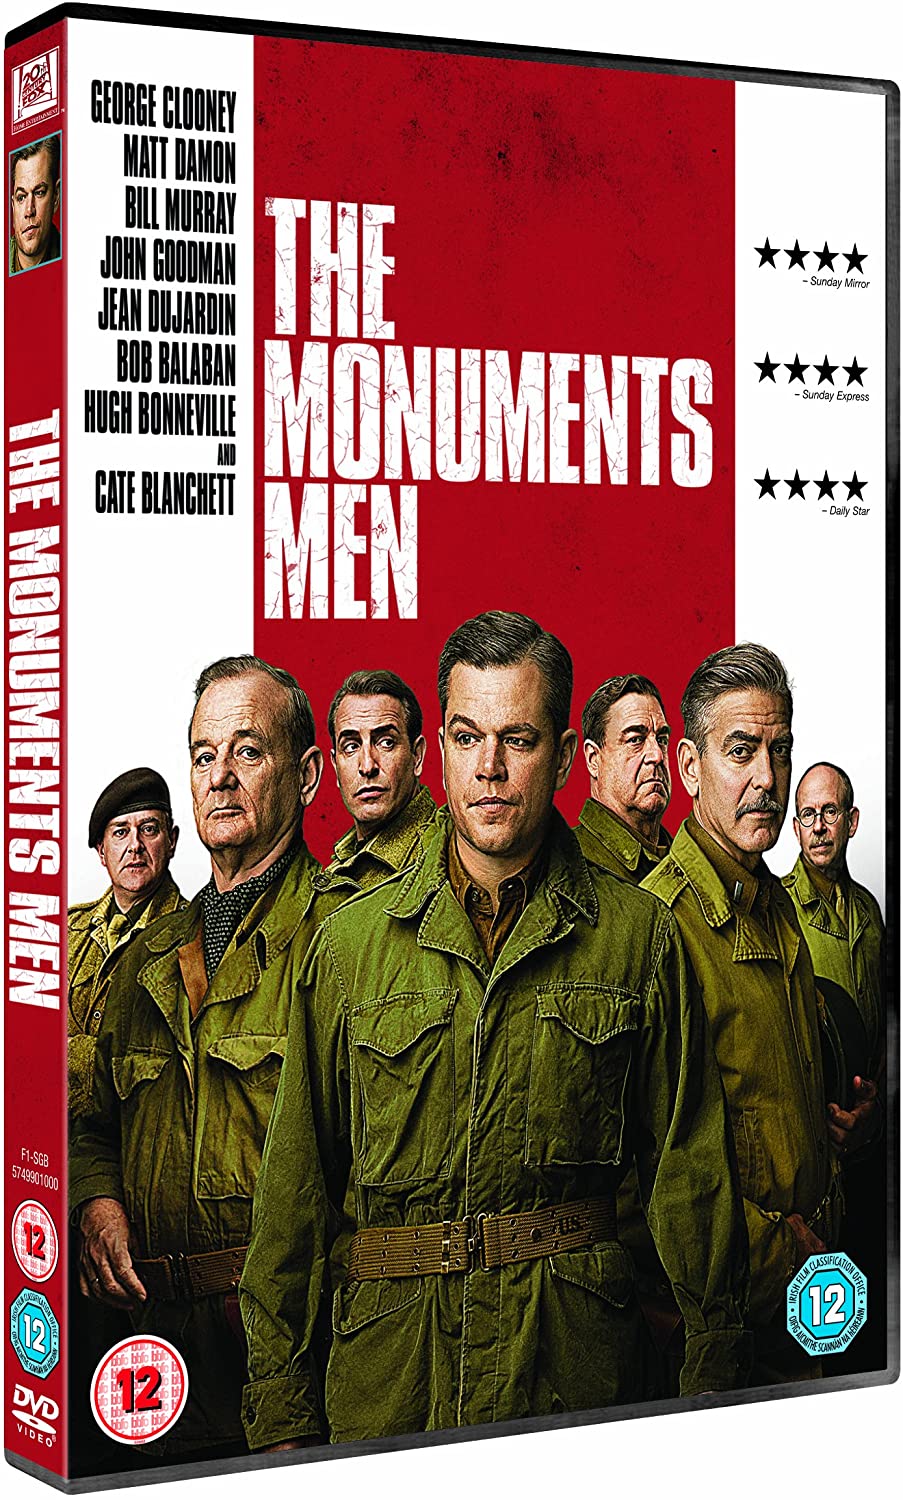 Die Denkmäler Männer [DVD]